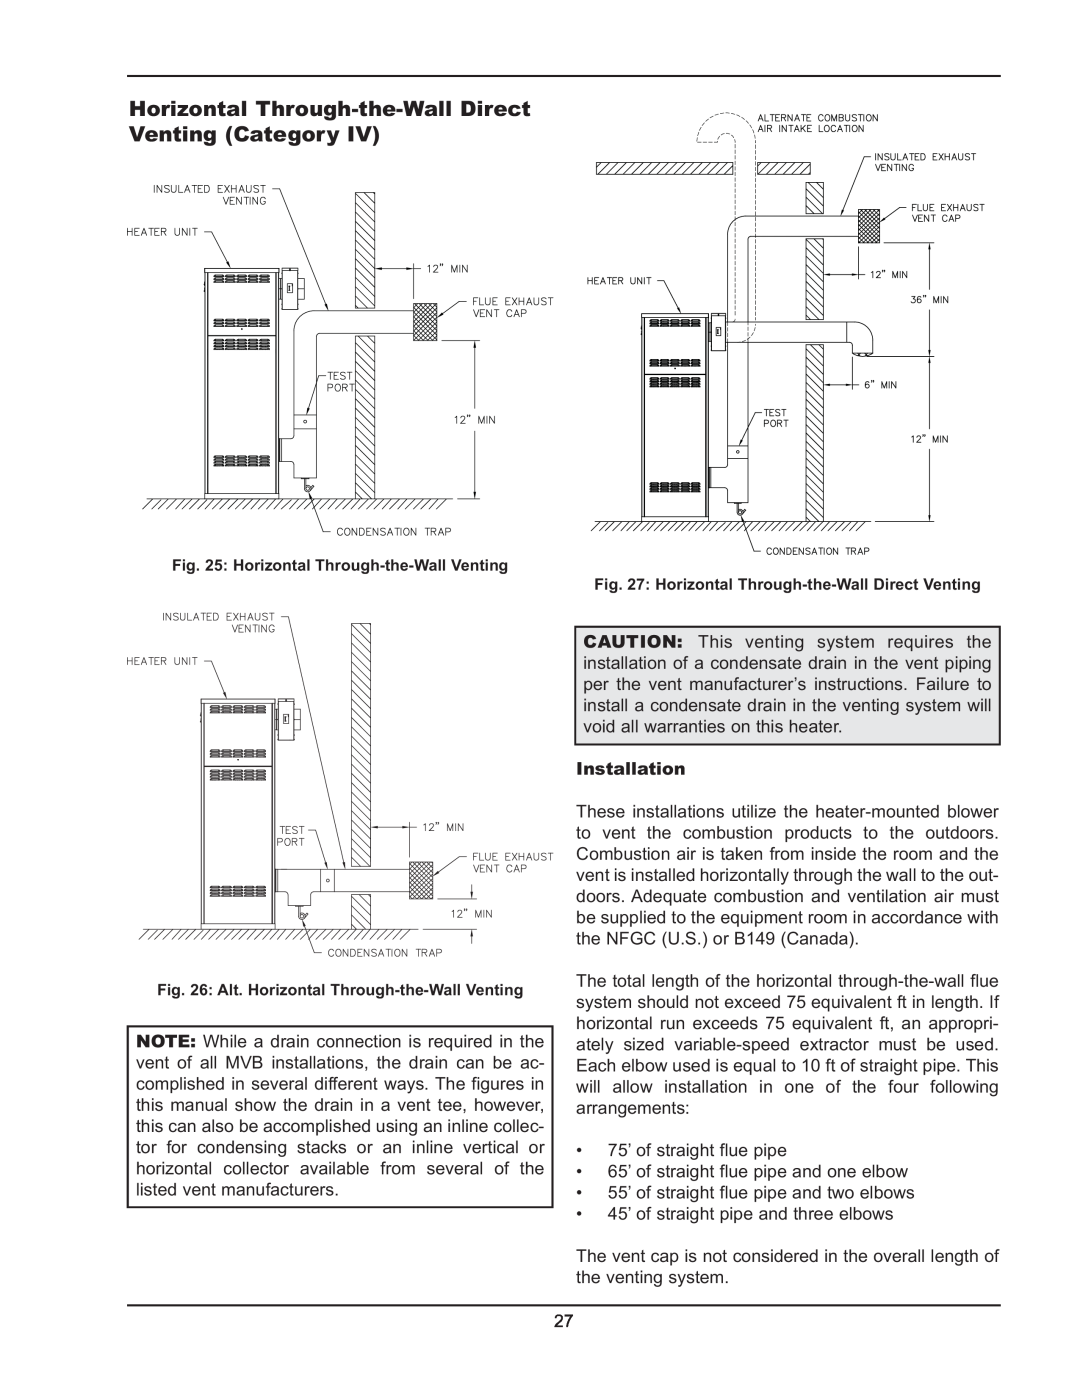 Raypak 503-2003 manual Installation, 75’ of straight flue pipe 